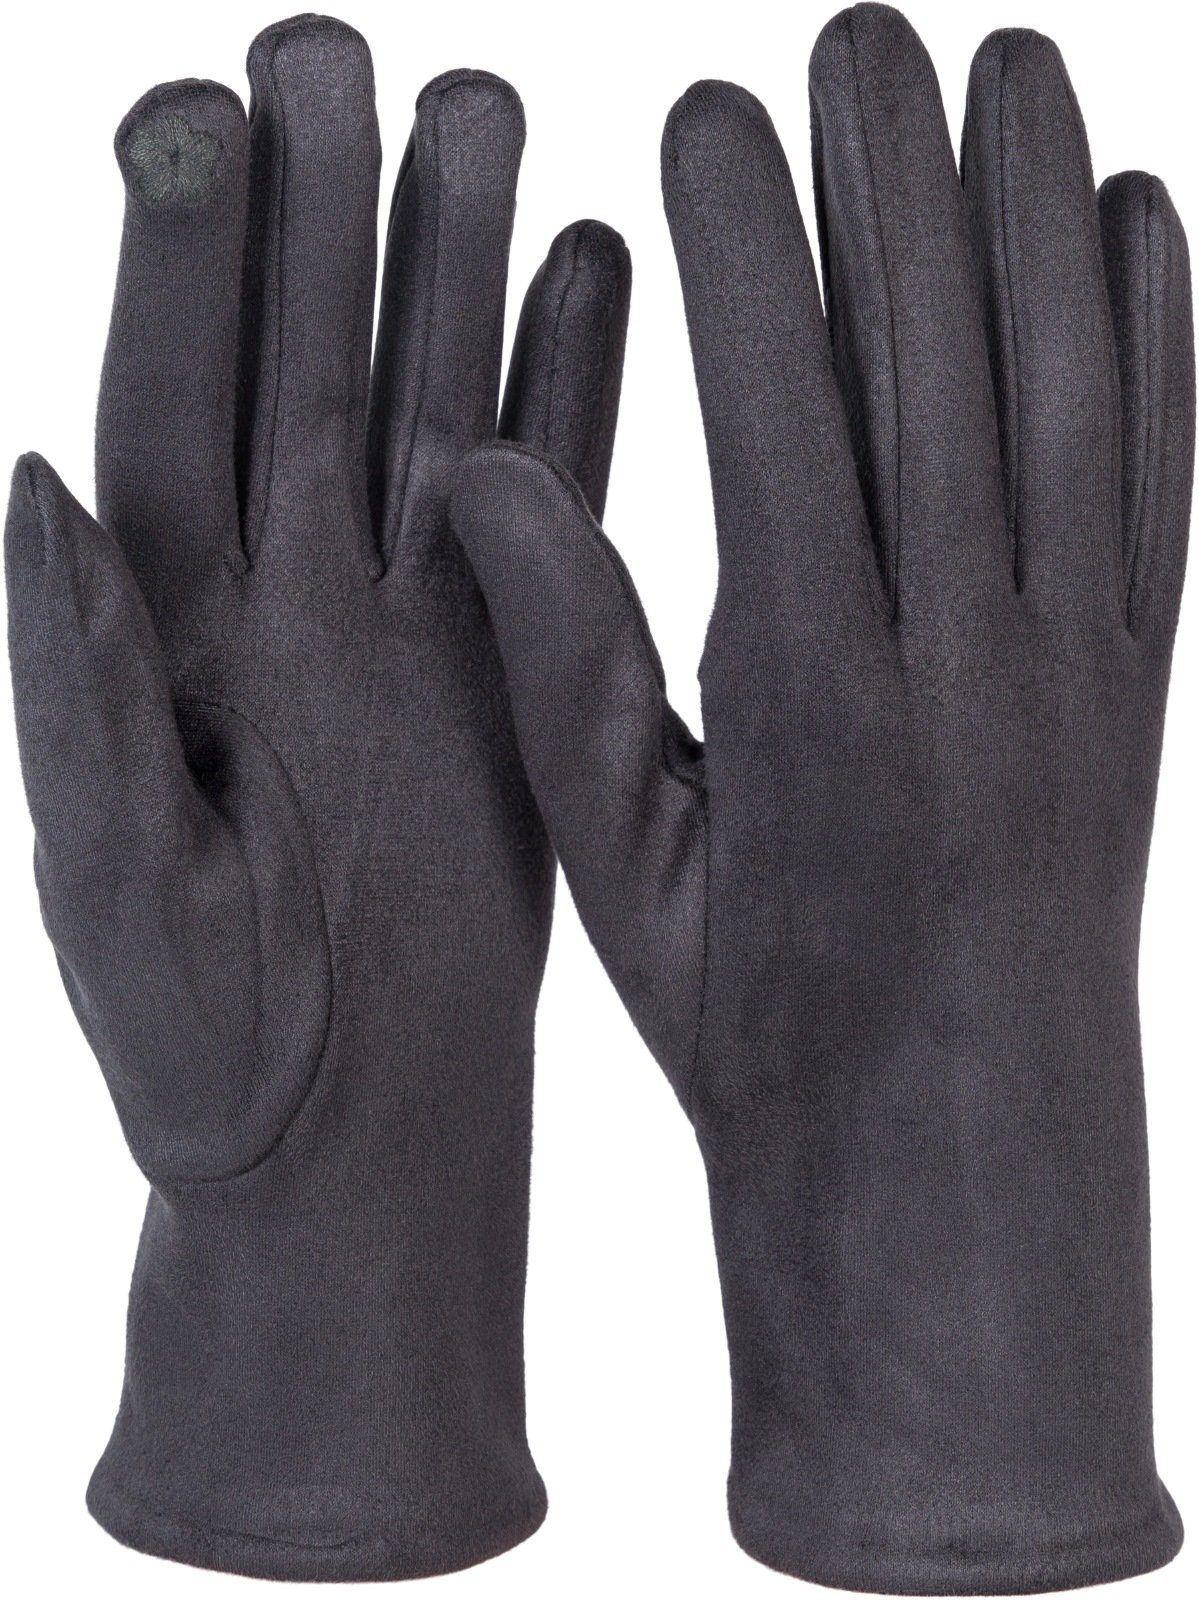 styleBREAKER Fleecehandschuhe Einfarbige Touchscreen Handschuhe Ziernähte Dunkelgrau